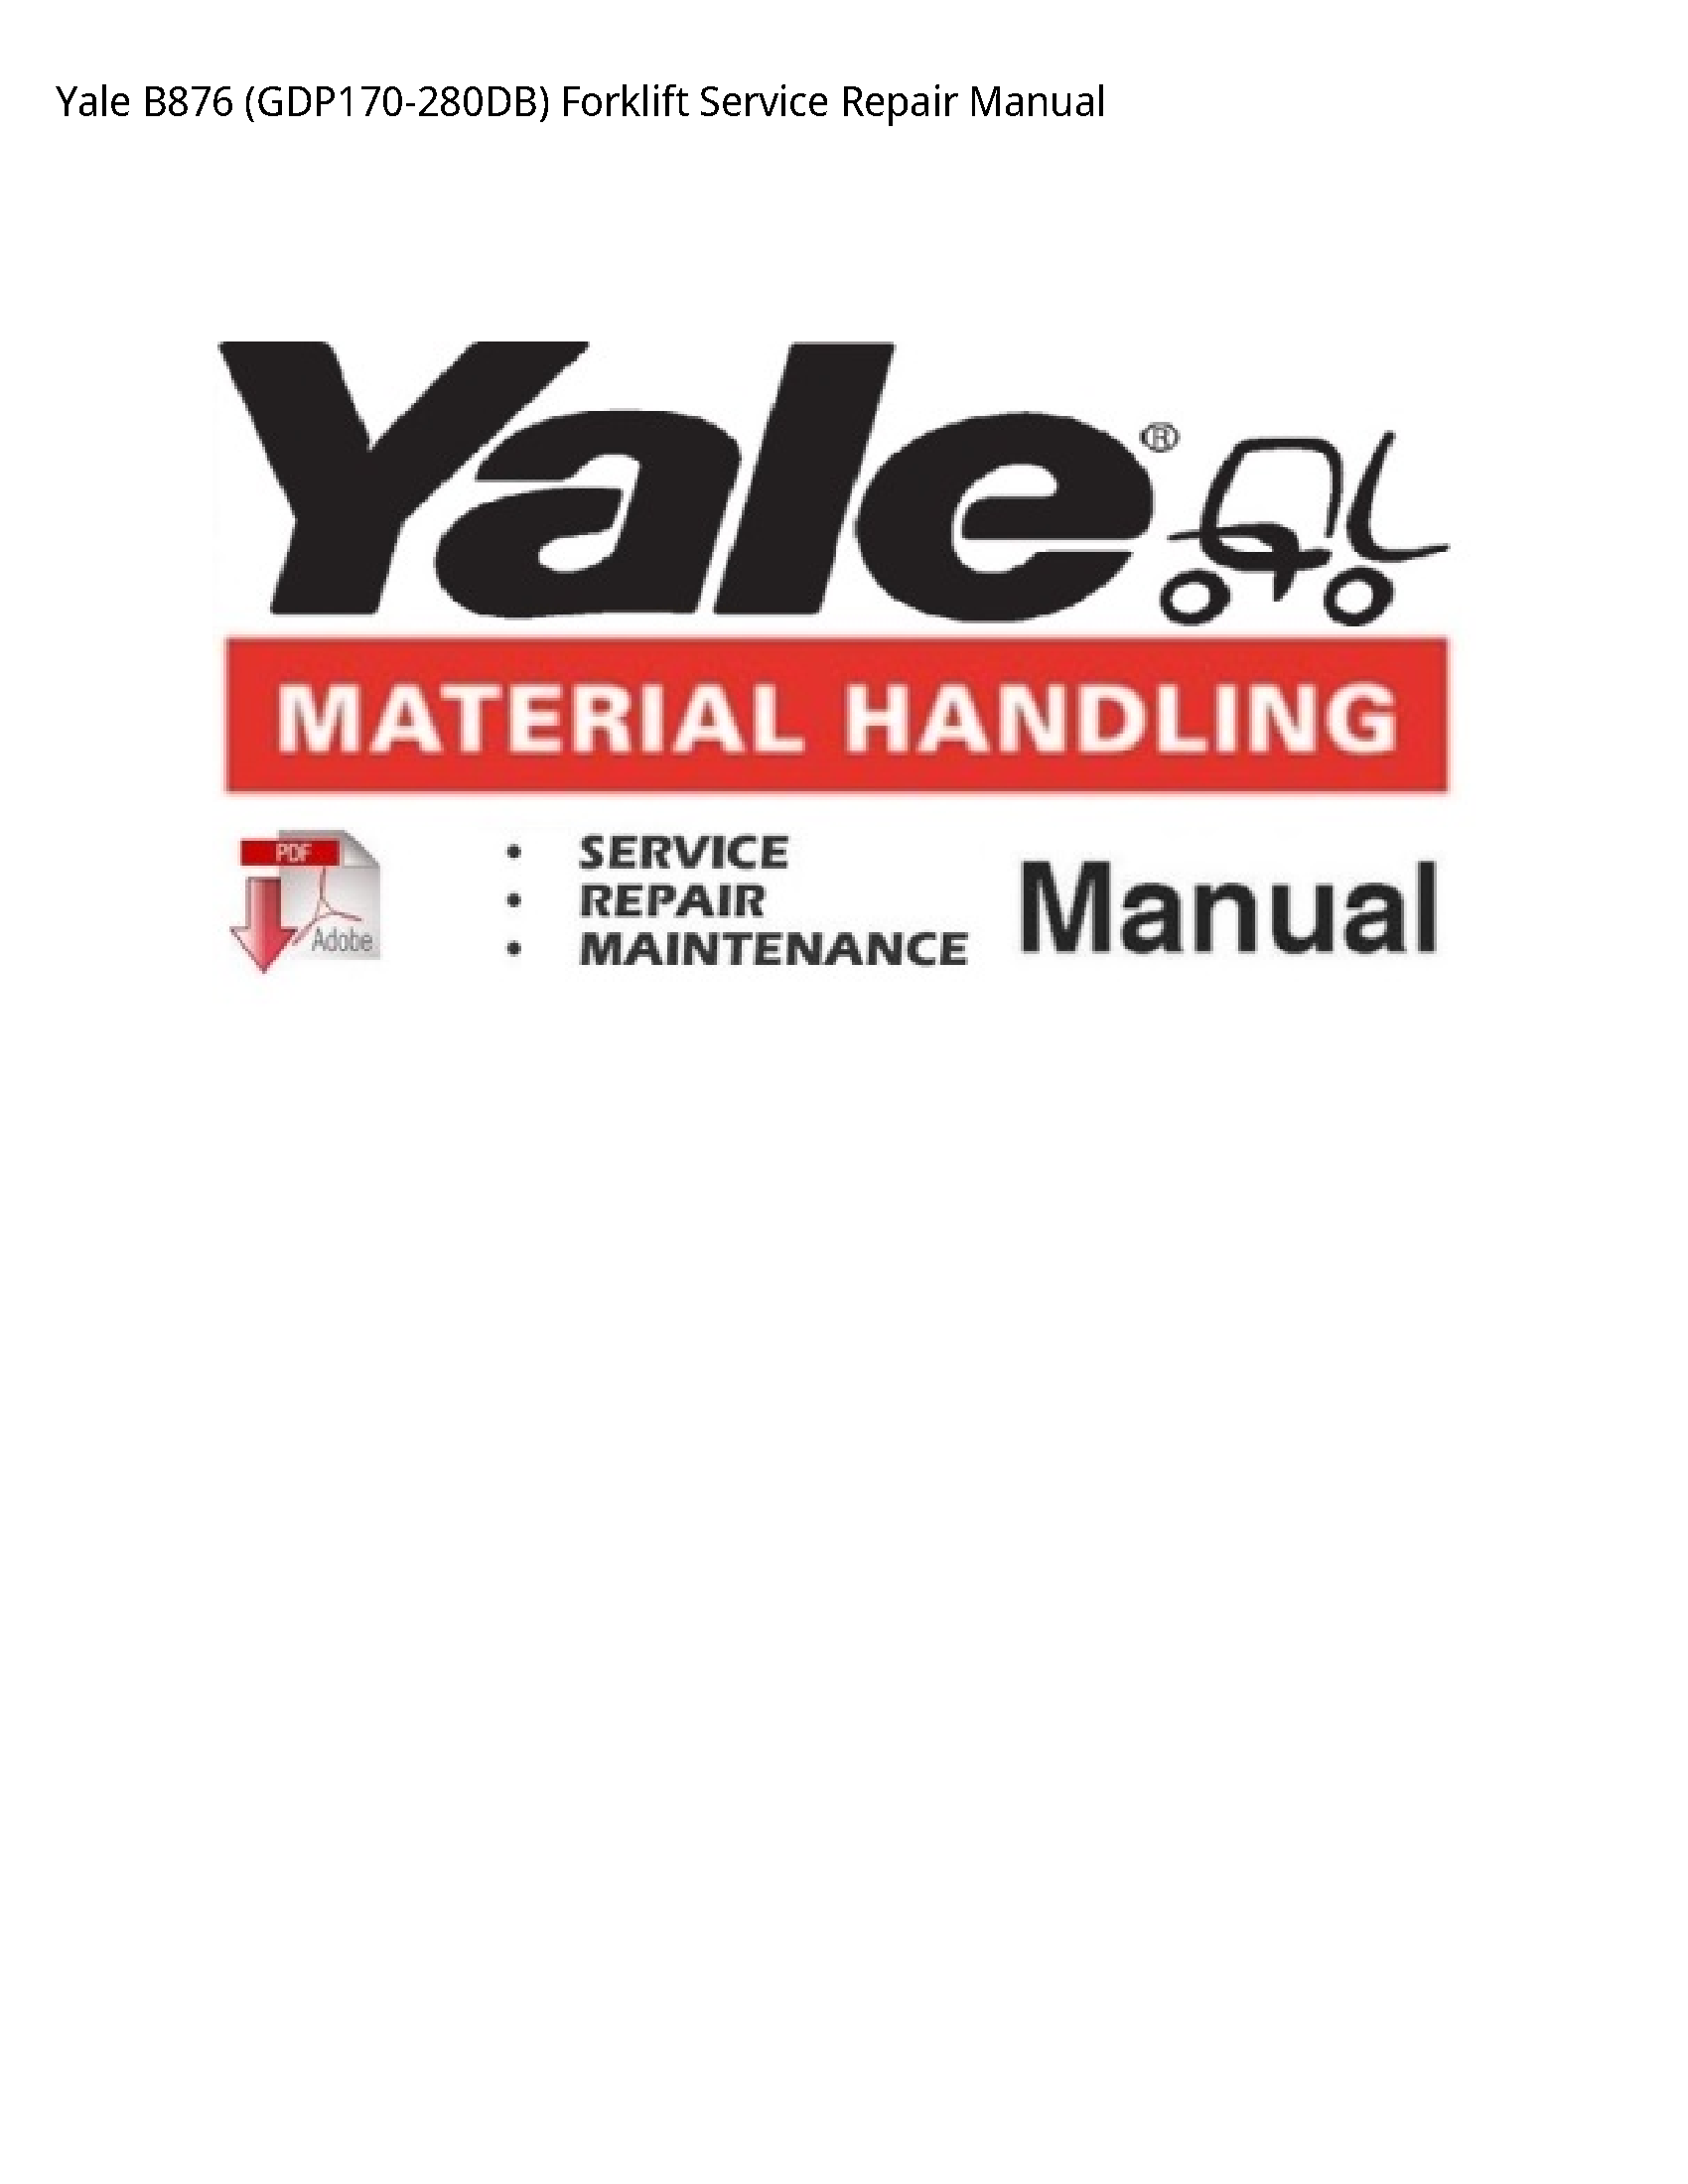 Yale B876 Forklift manual